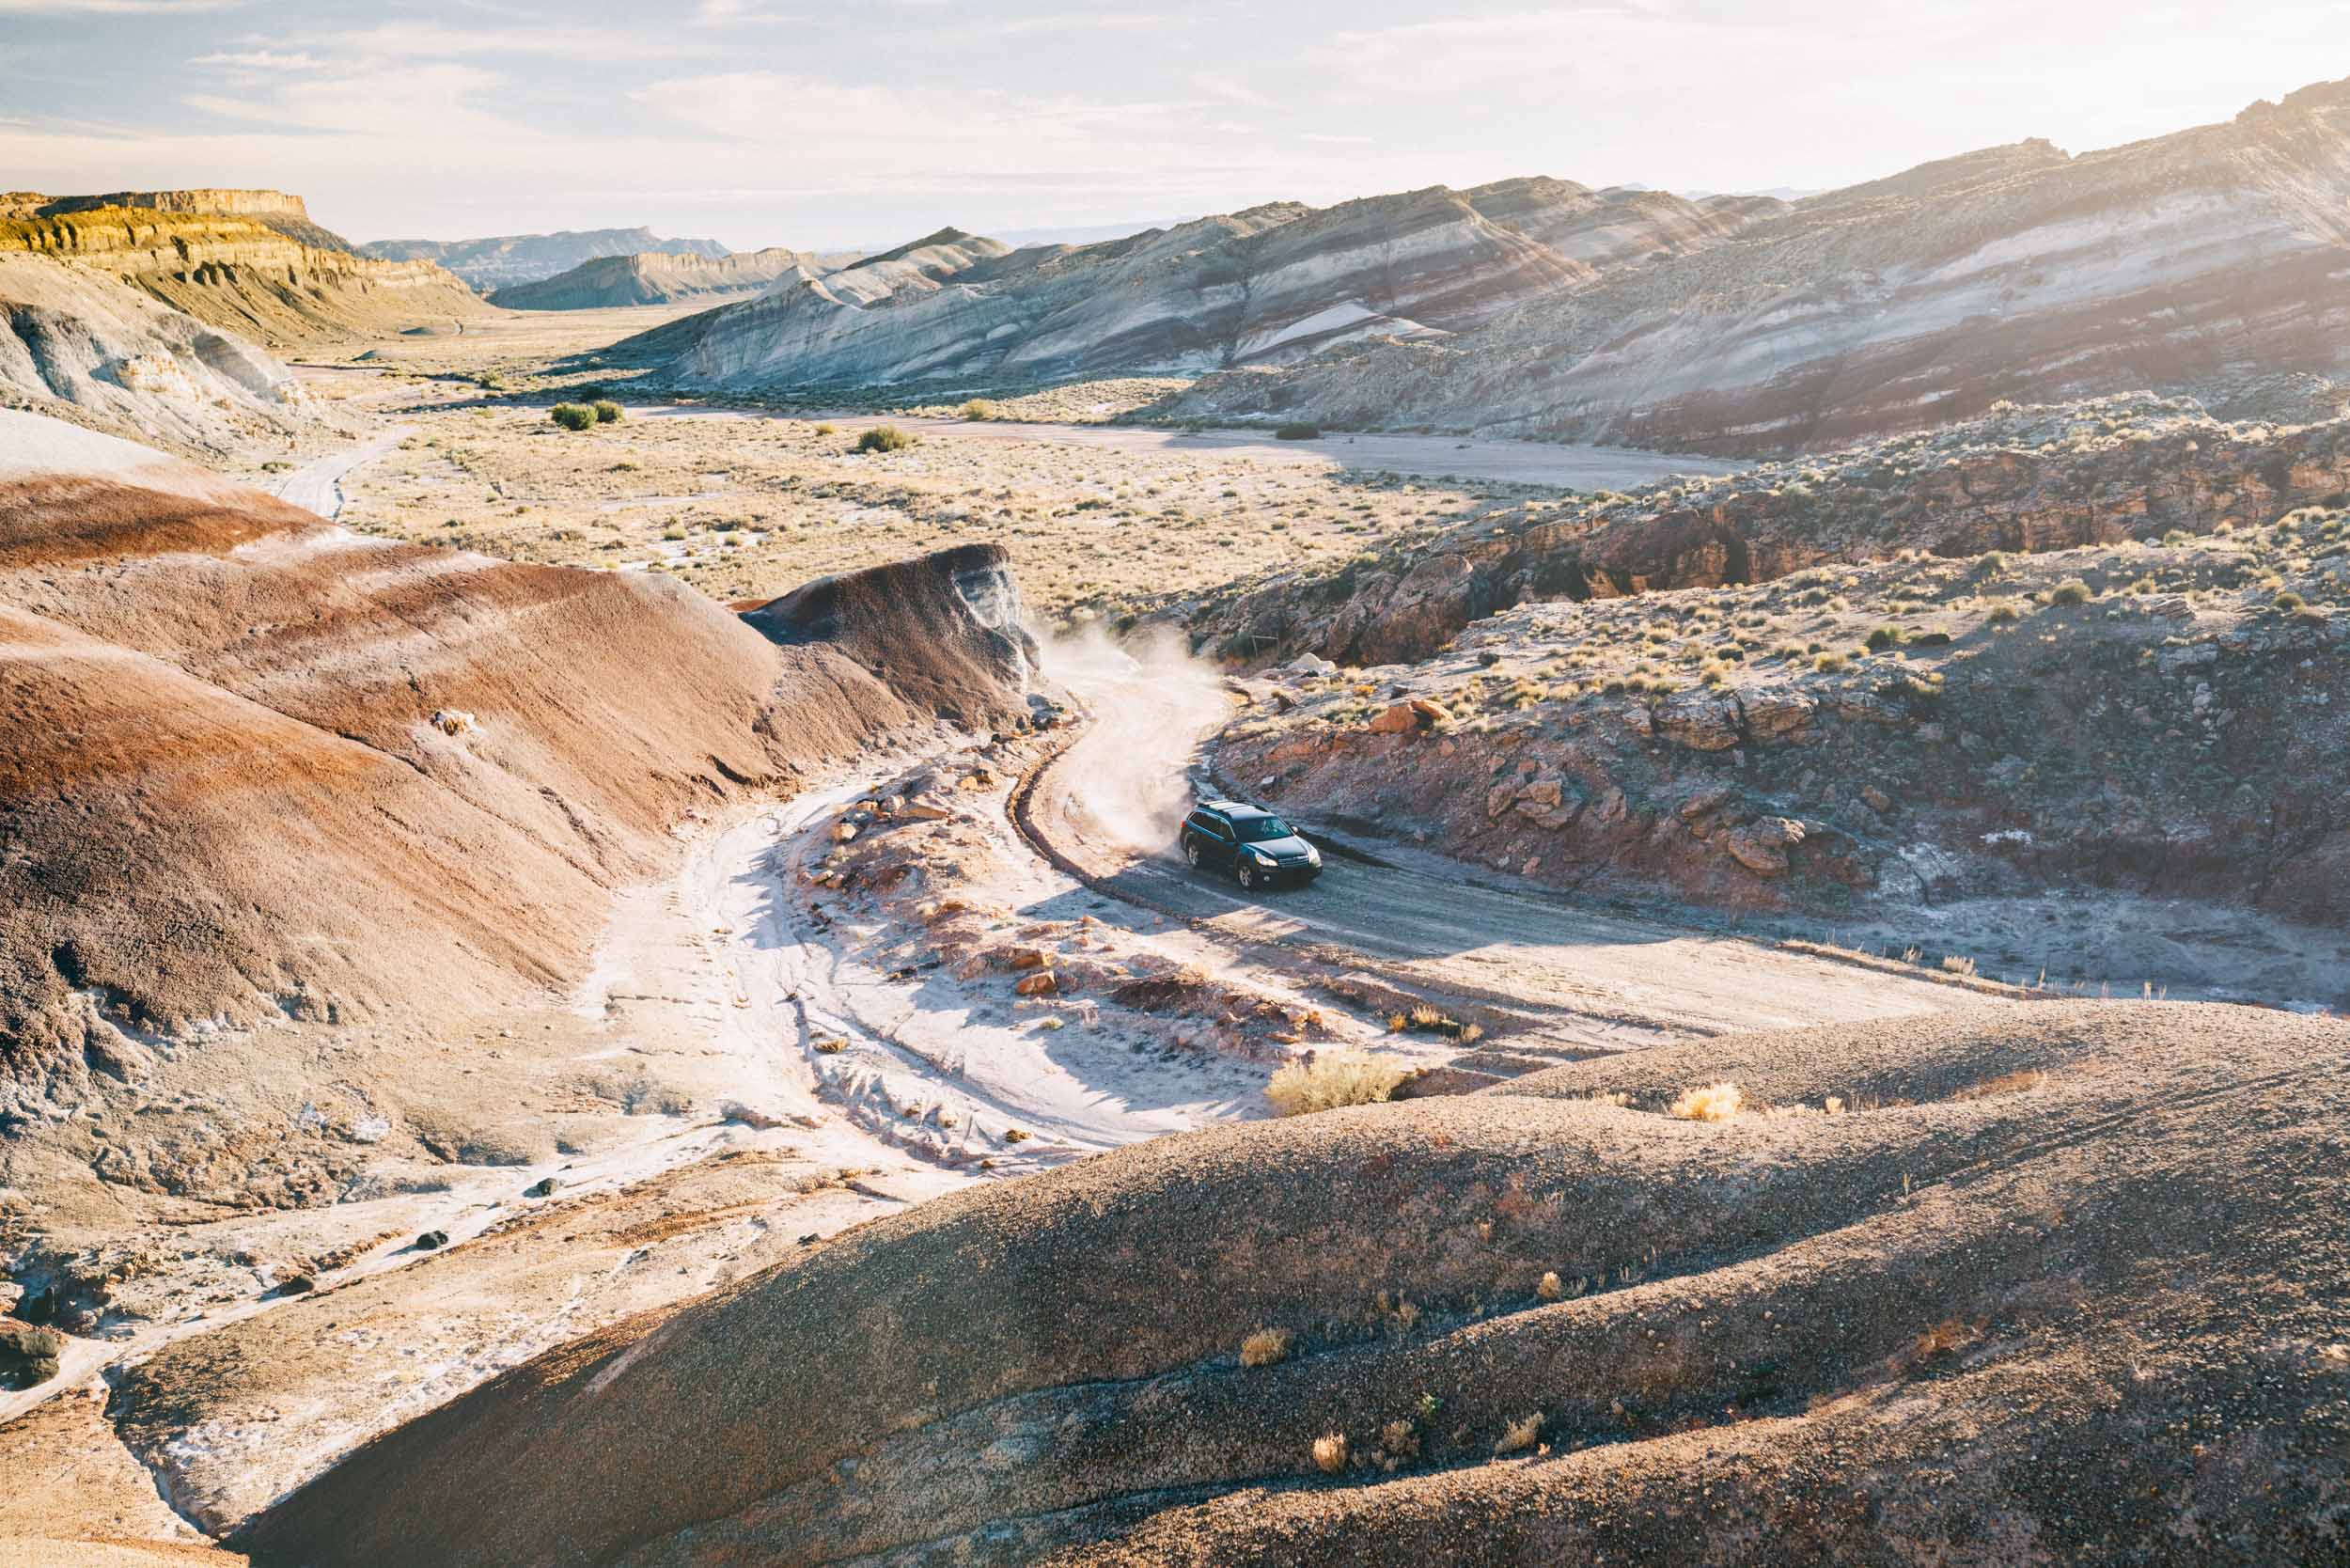 Grey Subaru Outback drives down a curvy desert road in Capitol Reef National Park Utah